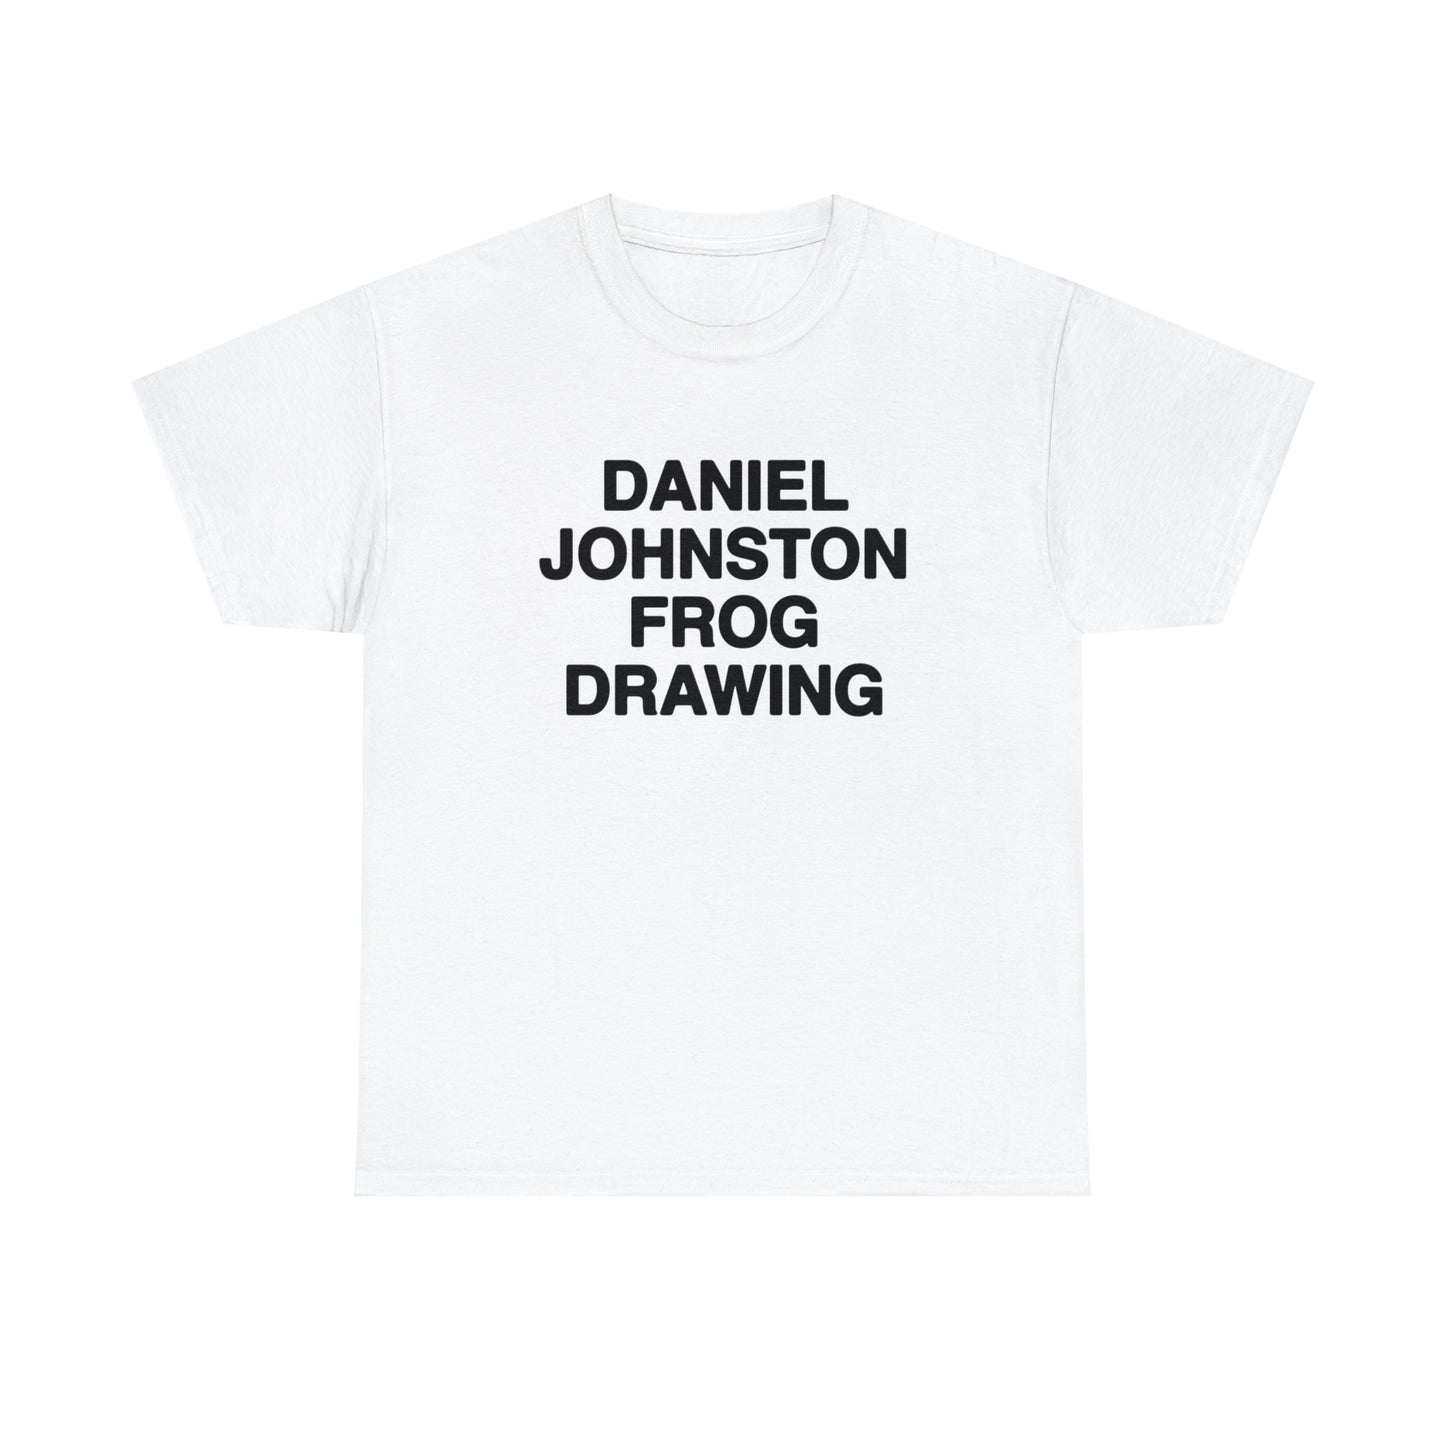 Daniel Johnston Frog Drawing.